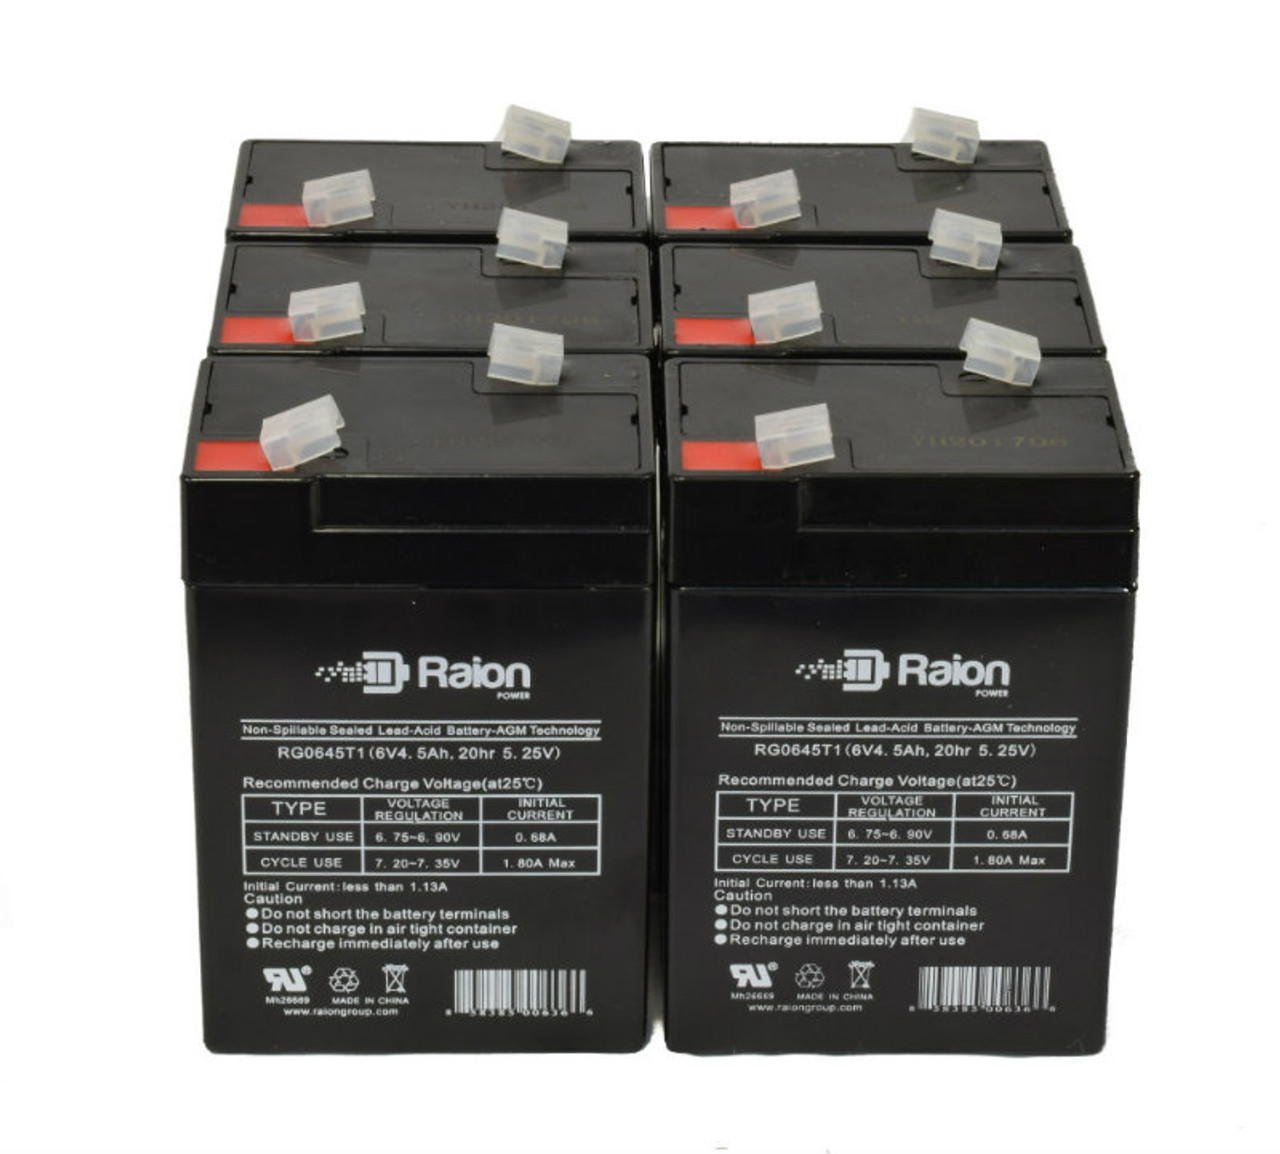 Raion Power 6V 4.5Ah Replacement Emergency Light Battery for Dual-Lite CVT3GW - 6 Pack